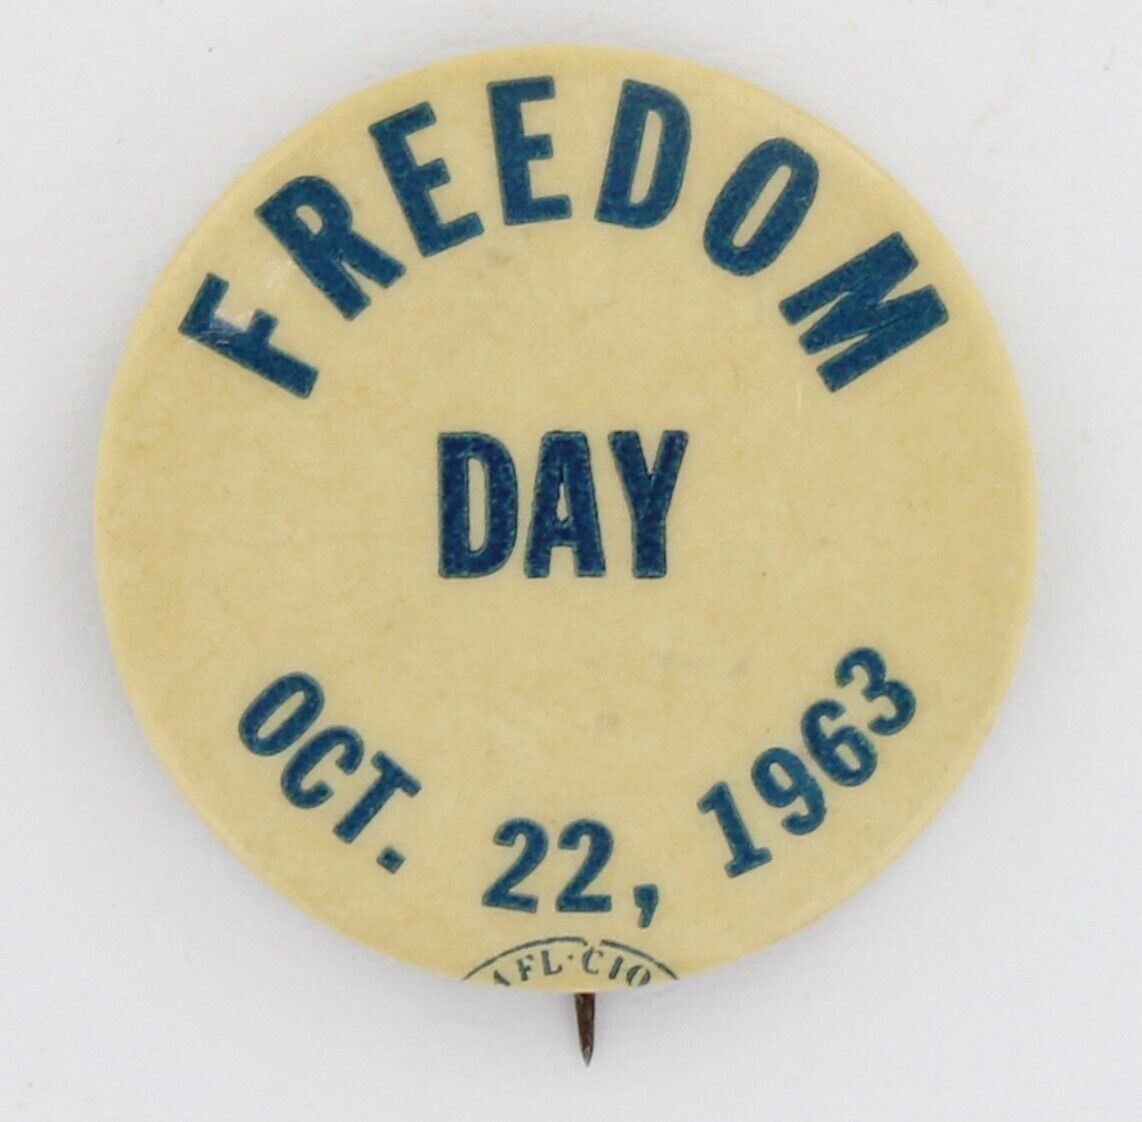 Freedom Day 1963 Chicago School Boycott Segregation SNCC Black Civil Rights